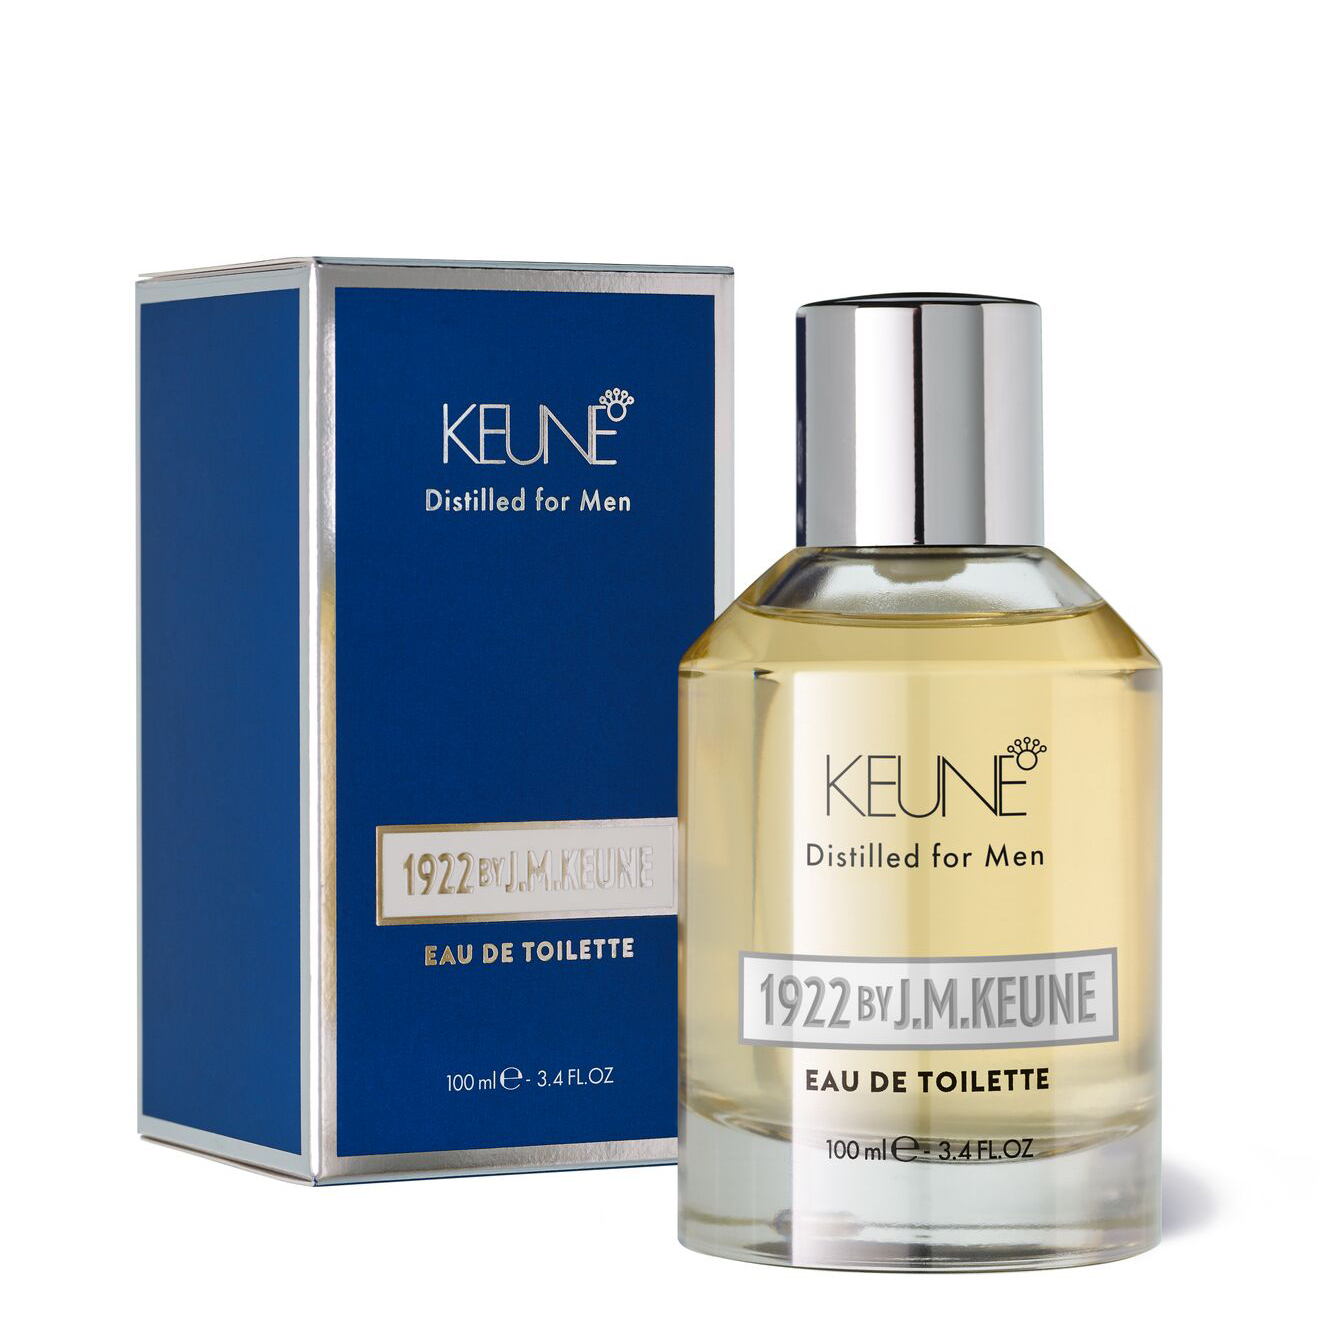 1922 Eau de Toilette, a masculine fragrance for the modern gentleman. Now available in a 100ml glass bottle. On Keune.ch.